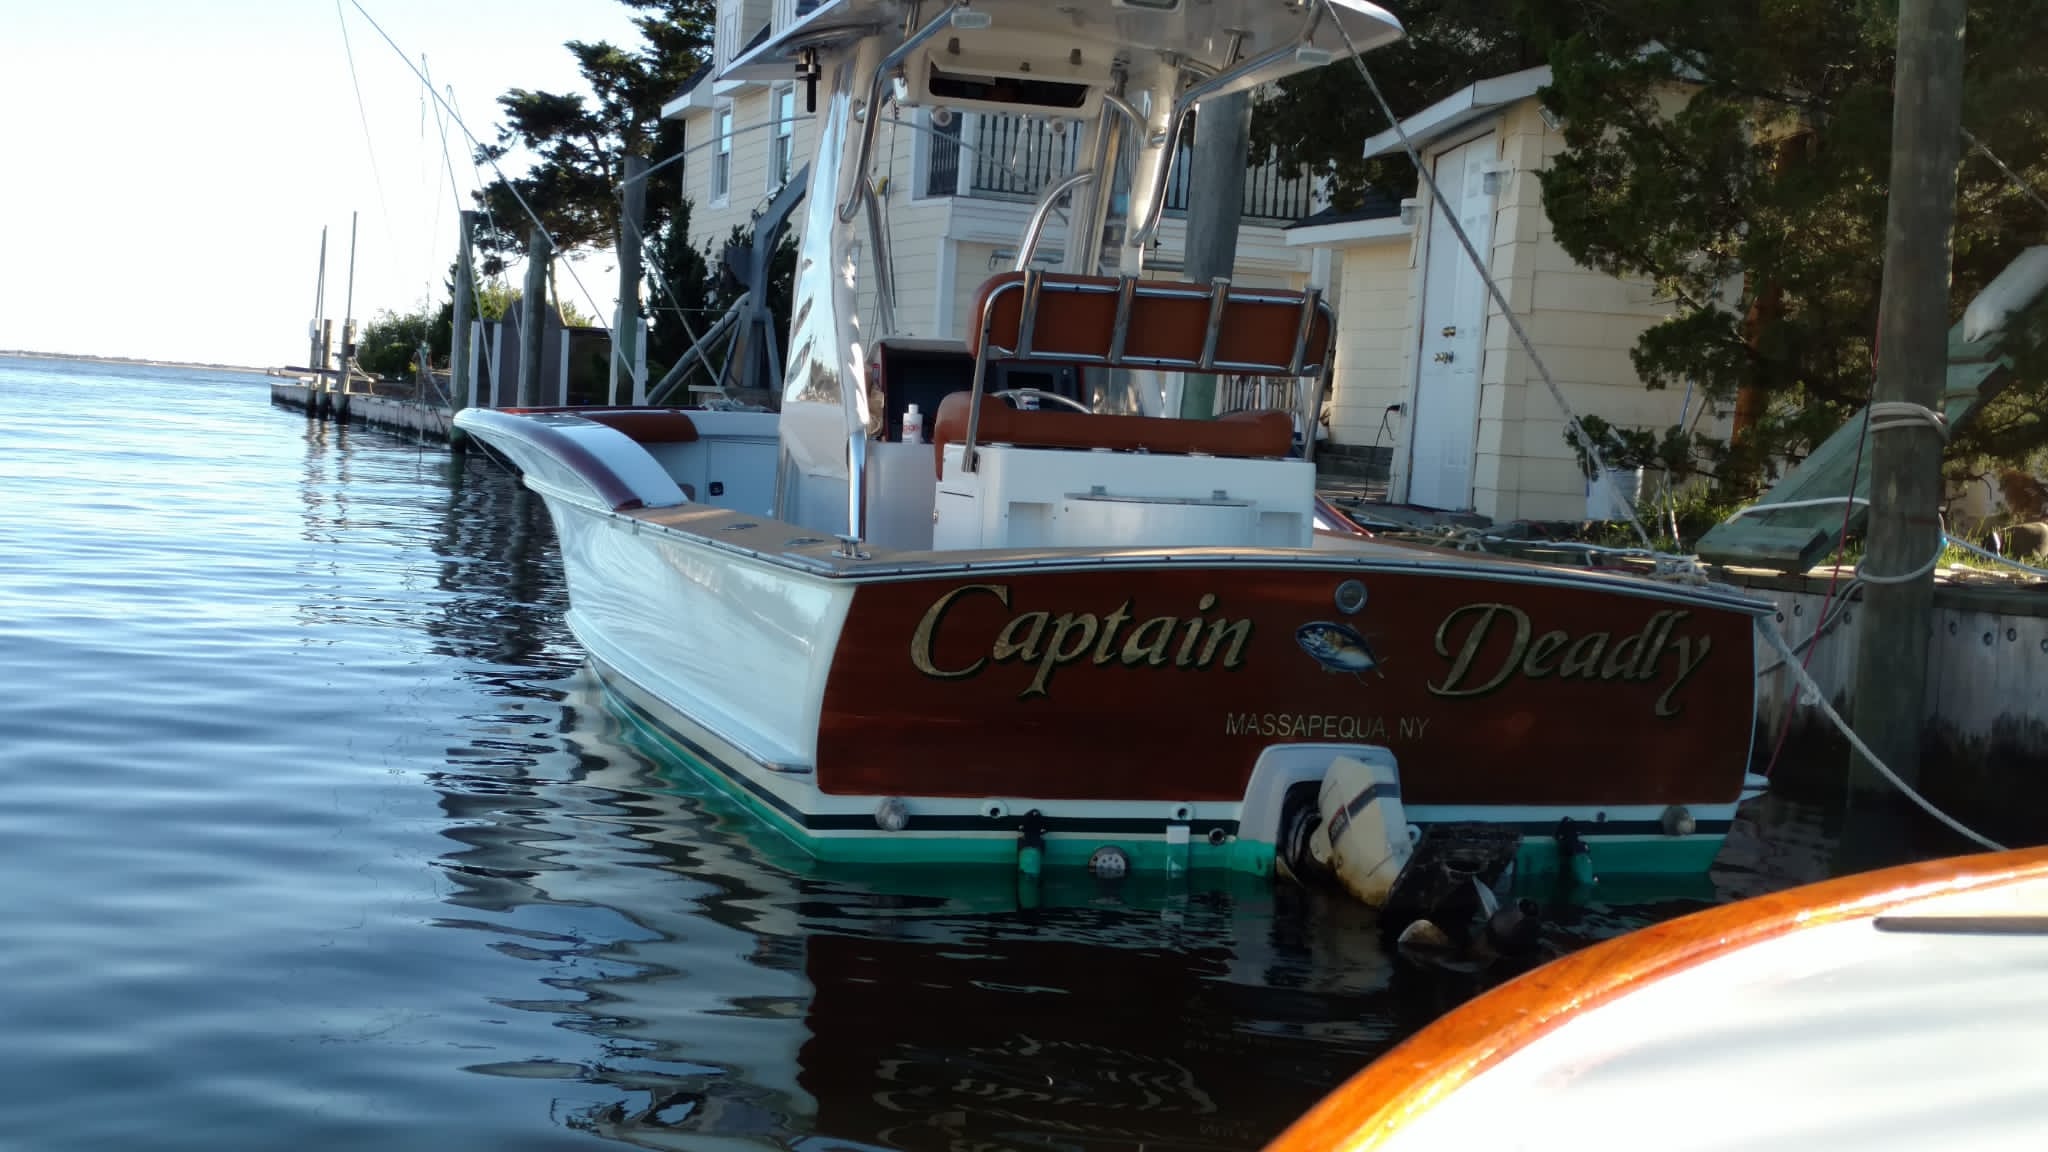 Captain Deadly Yacht Photos Pics 